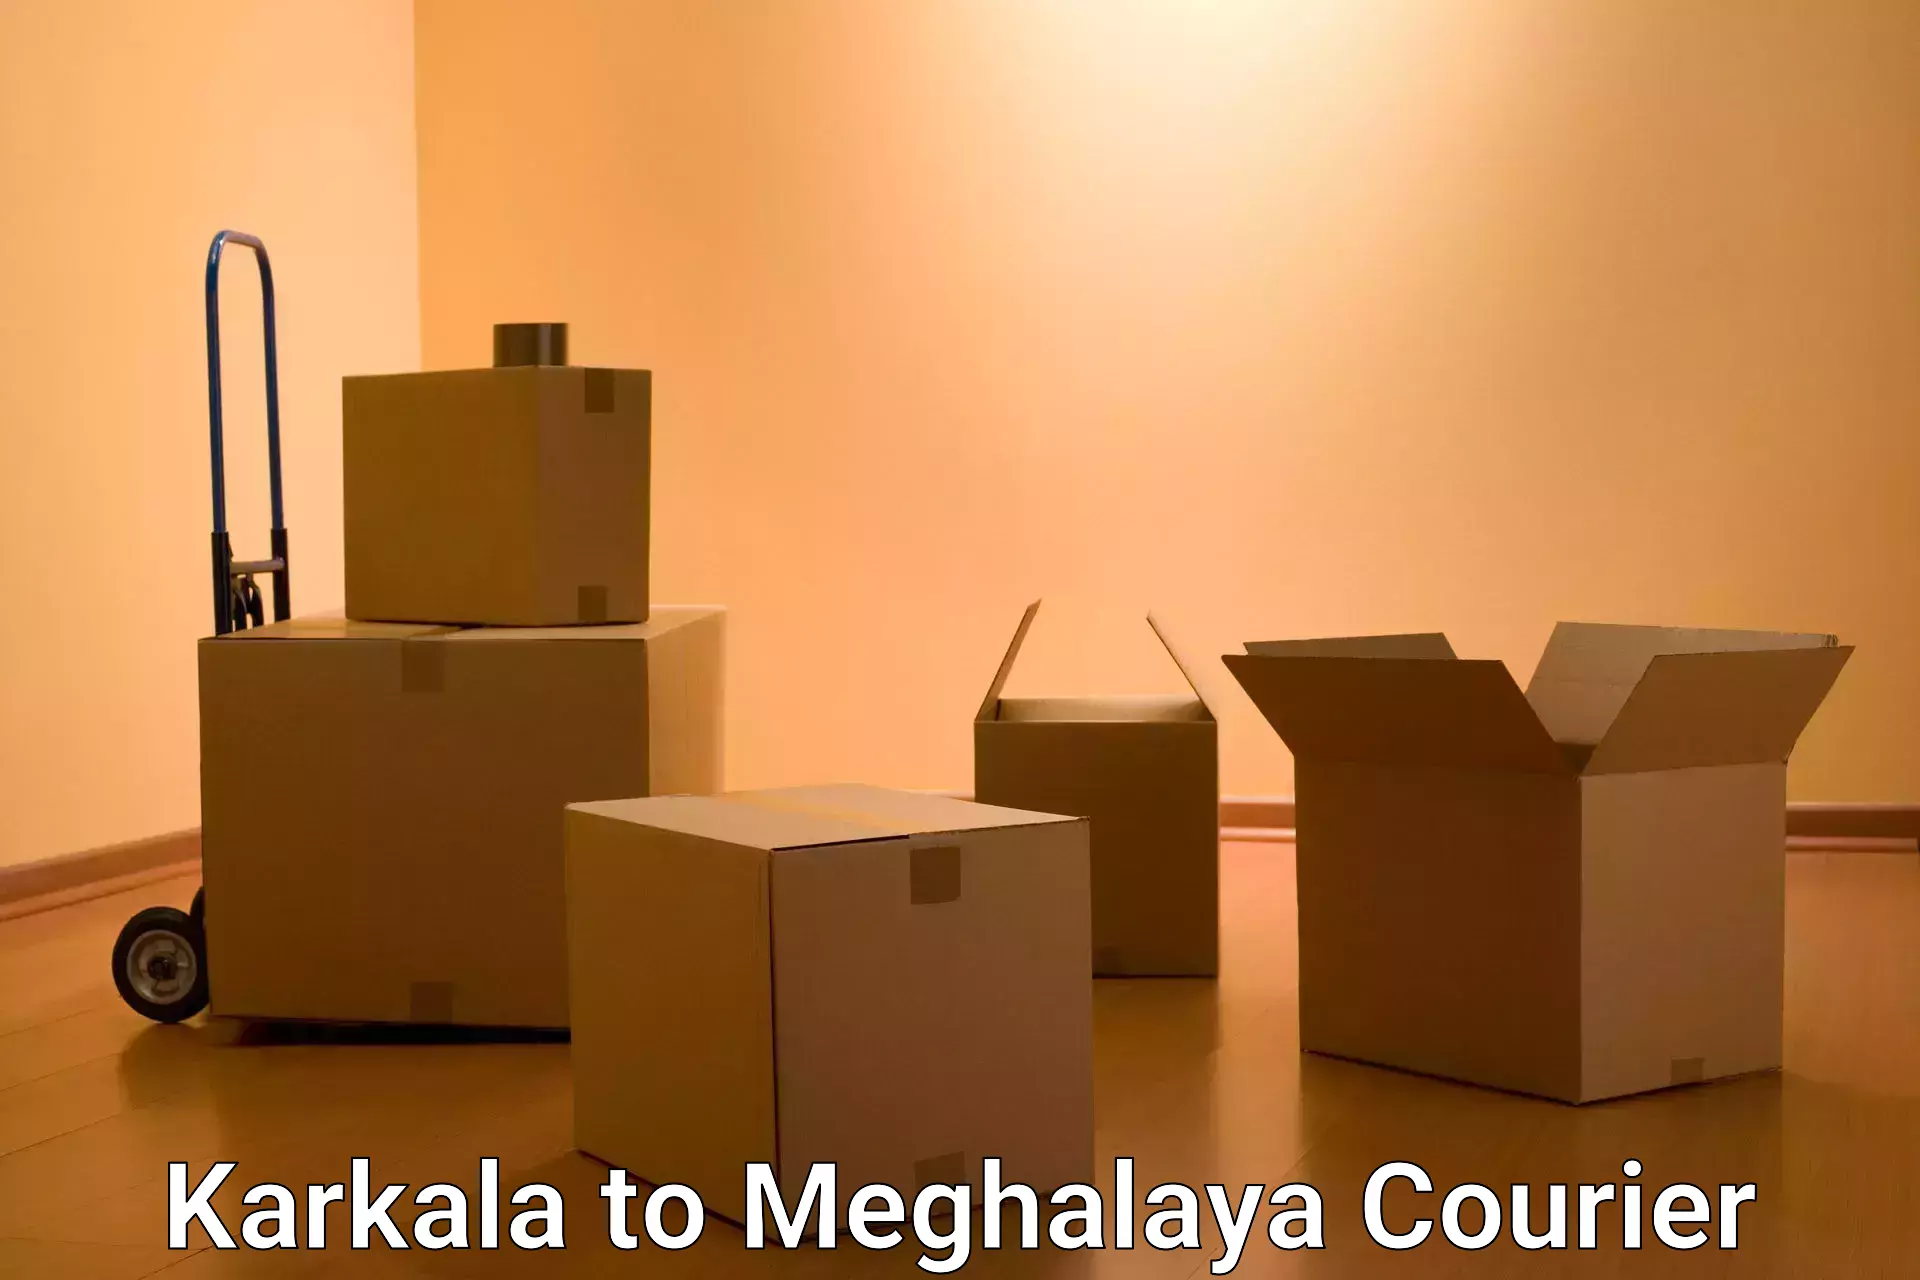 Courier service comparison Karkala to Shillong